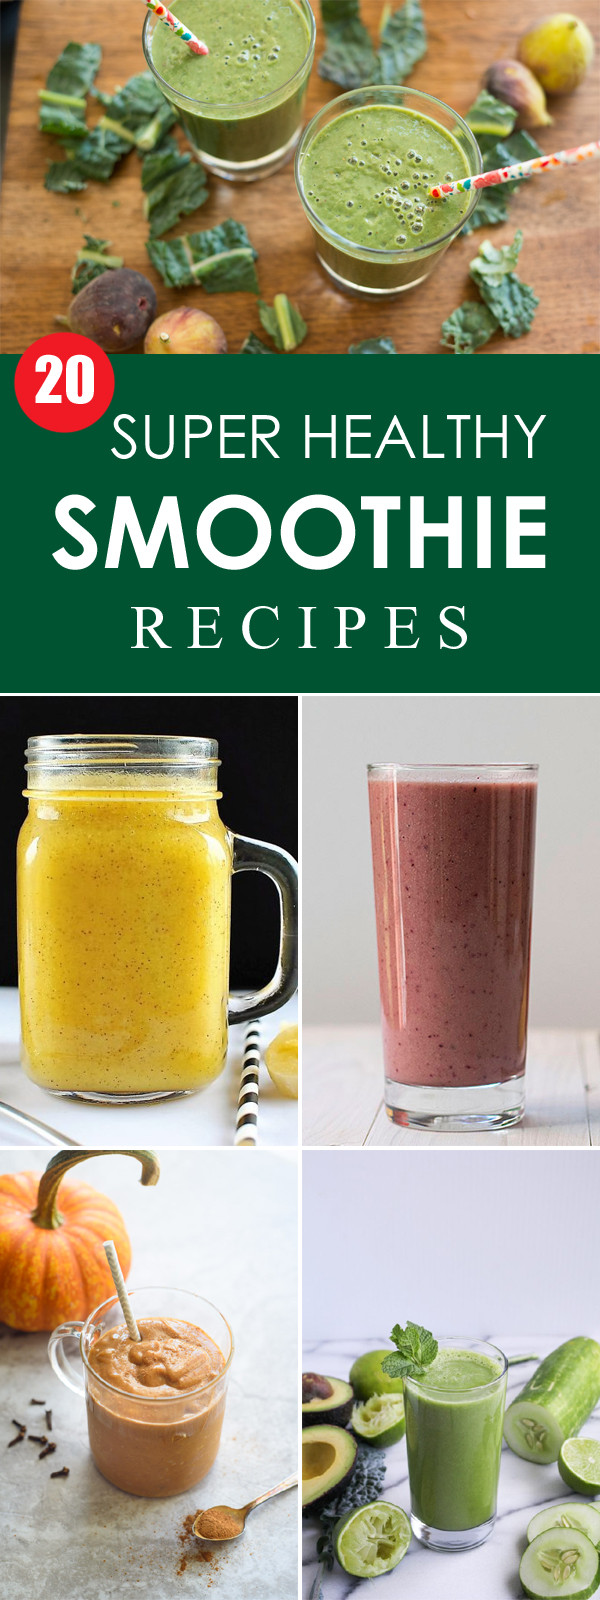 Super Healthy Smoothie Recipes
 20 Super Healthy Smoothie Recipes